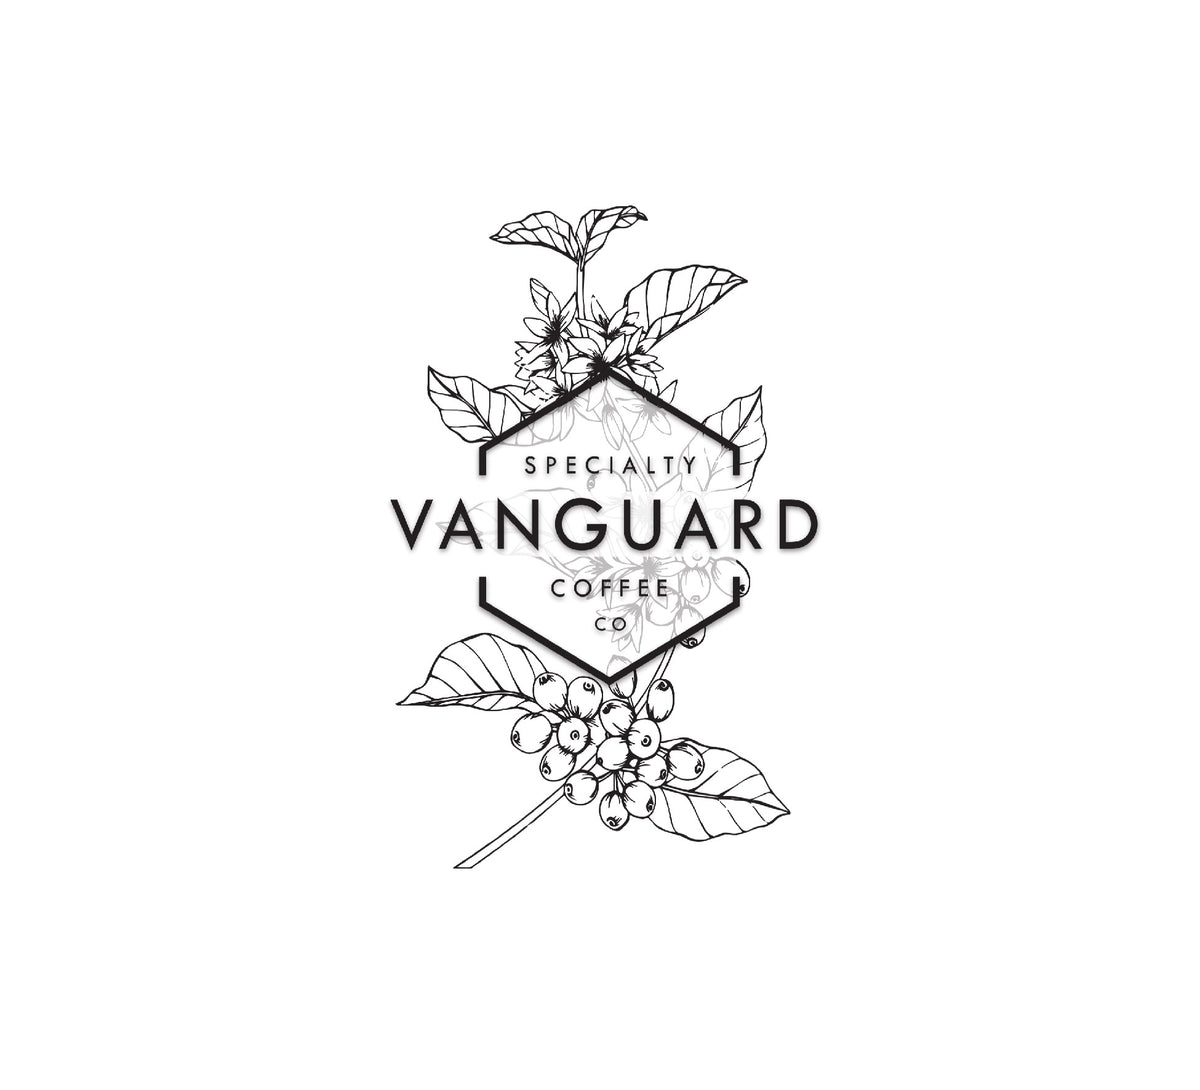 ”Vanguard